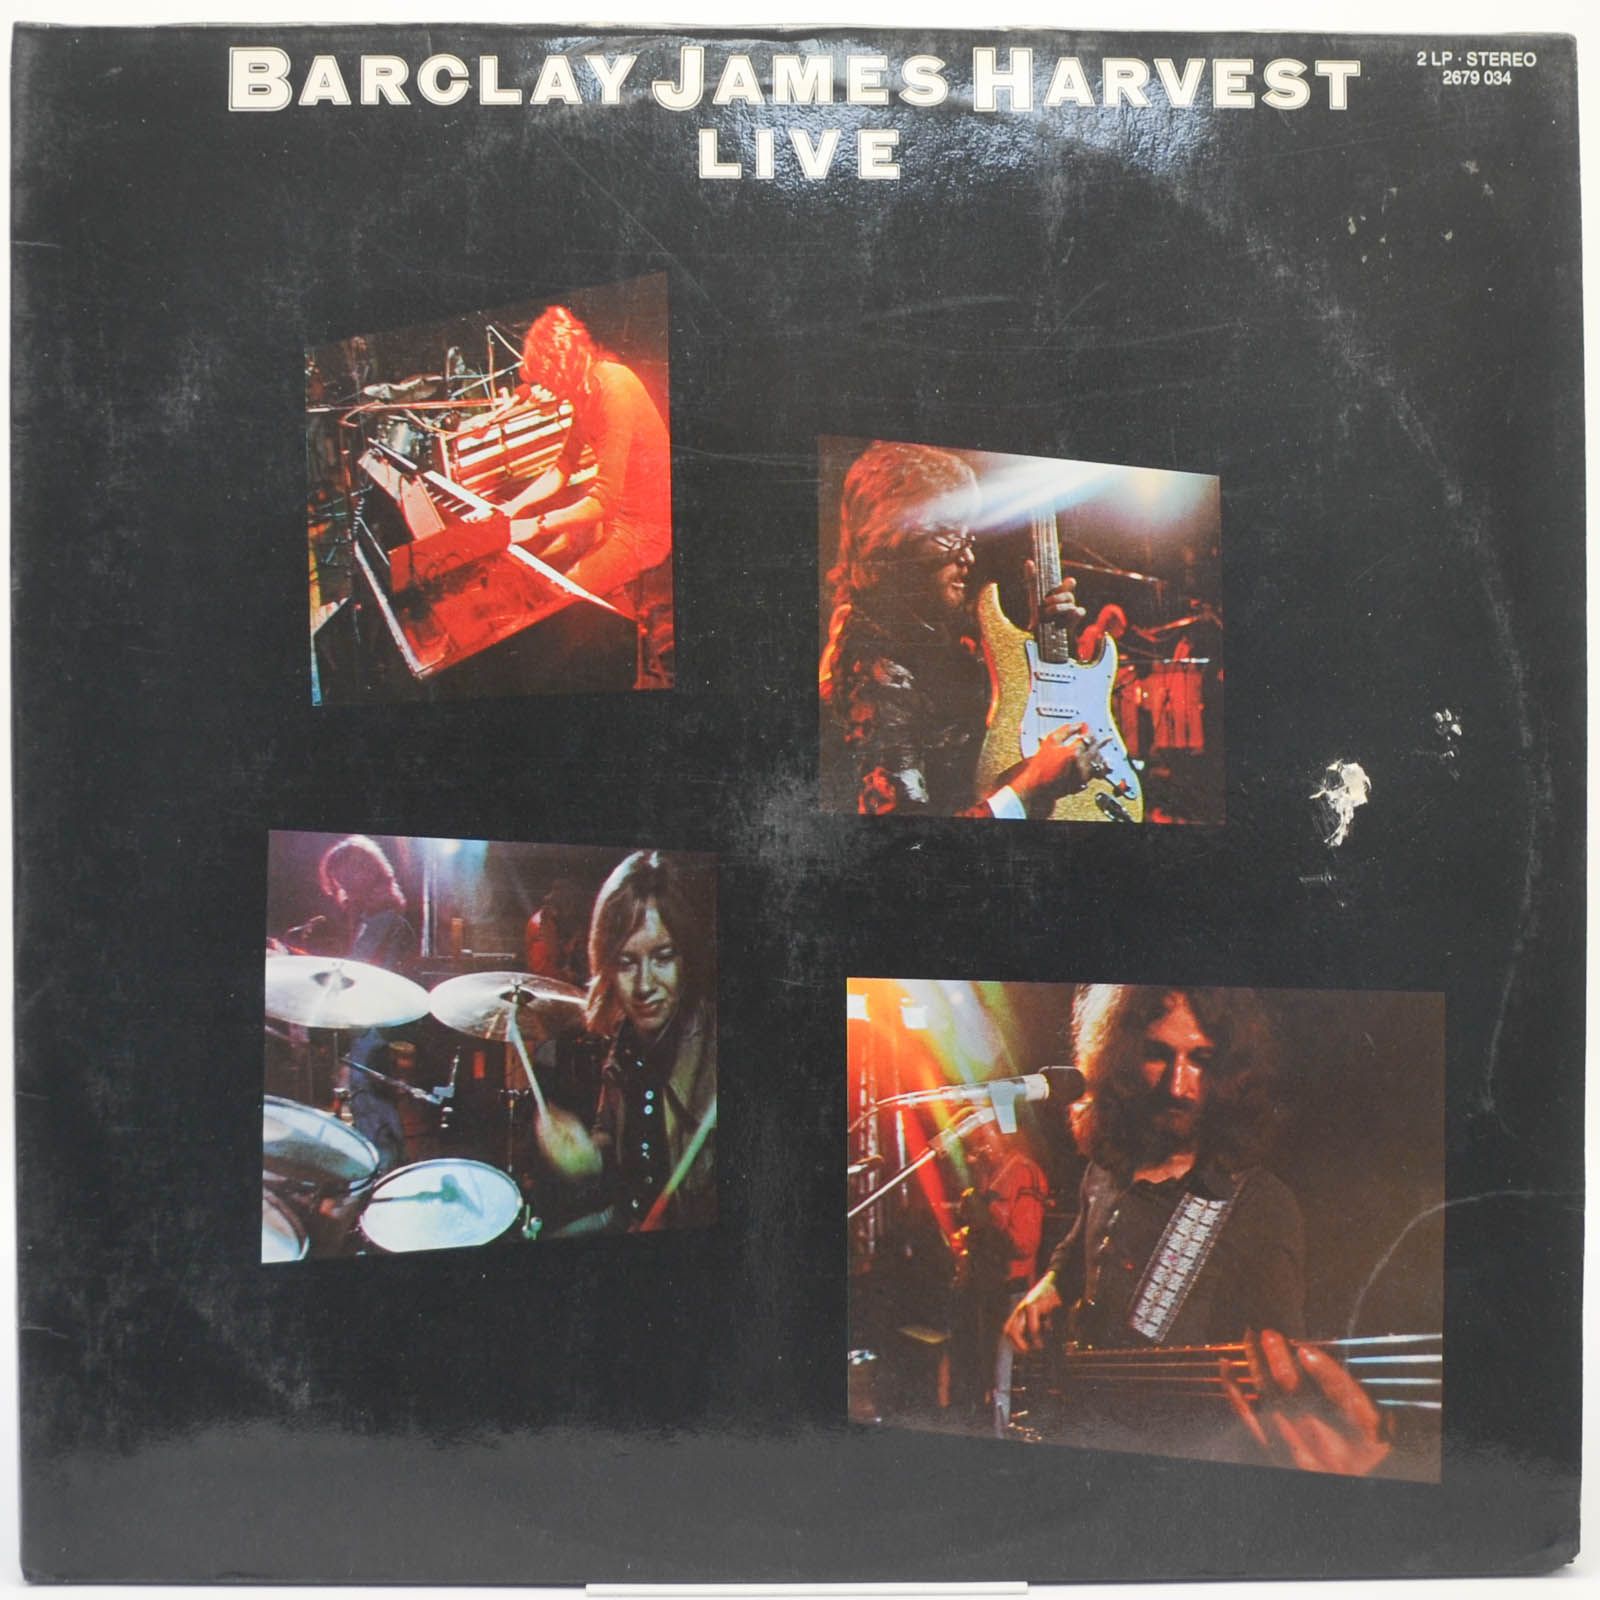 Barclay James Harvest — Live (2LP), 1974